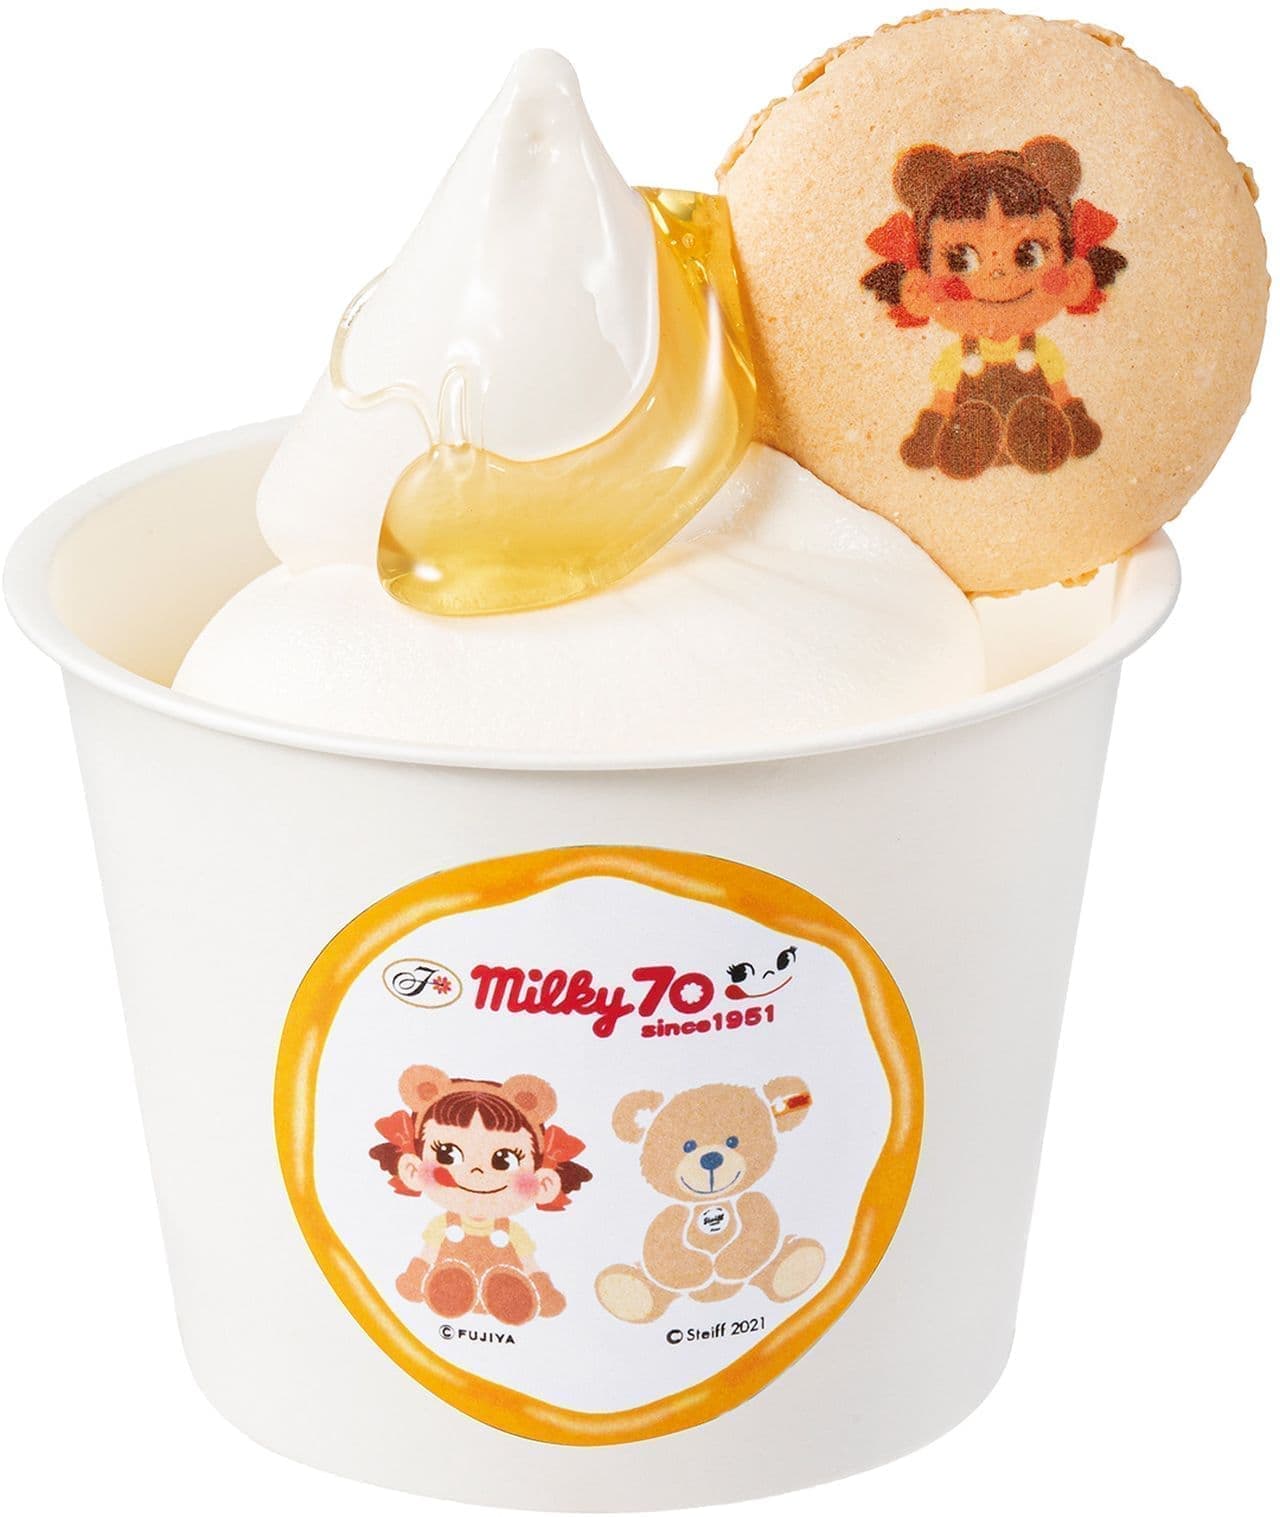 Premium milky soft serve (Peco's recommended honey flavor)